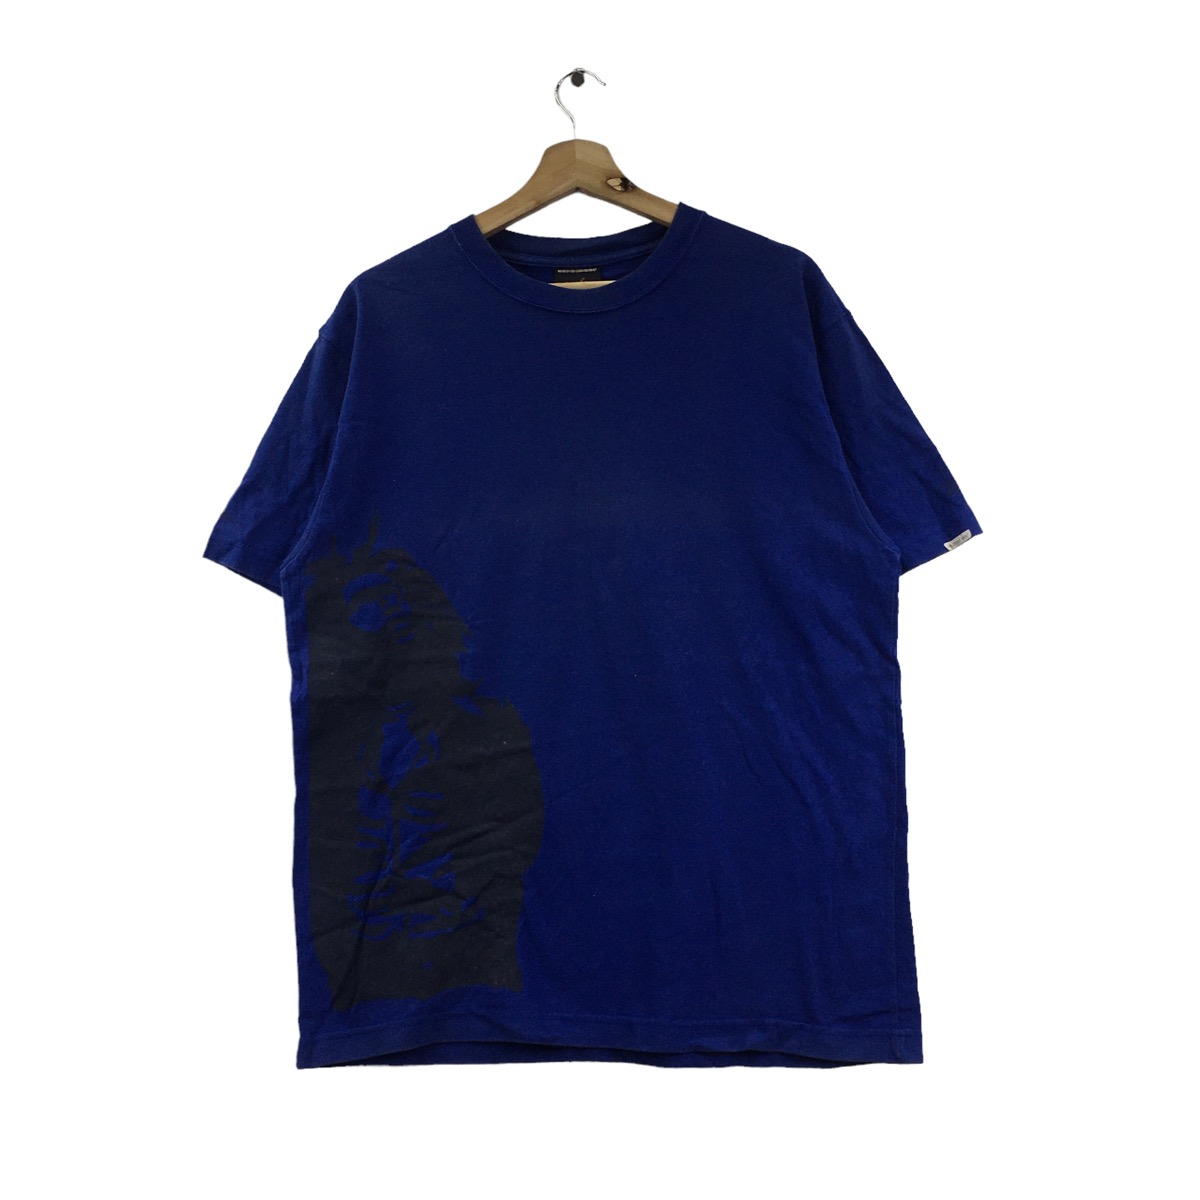 NEIGHBORHOOD JAPAN SMLX 2003 S/S Collection Blue Tee Shirt